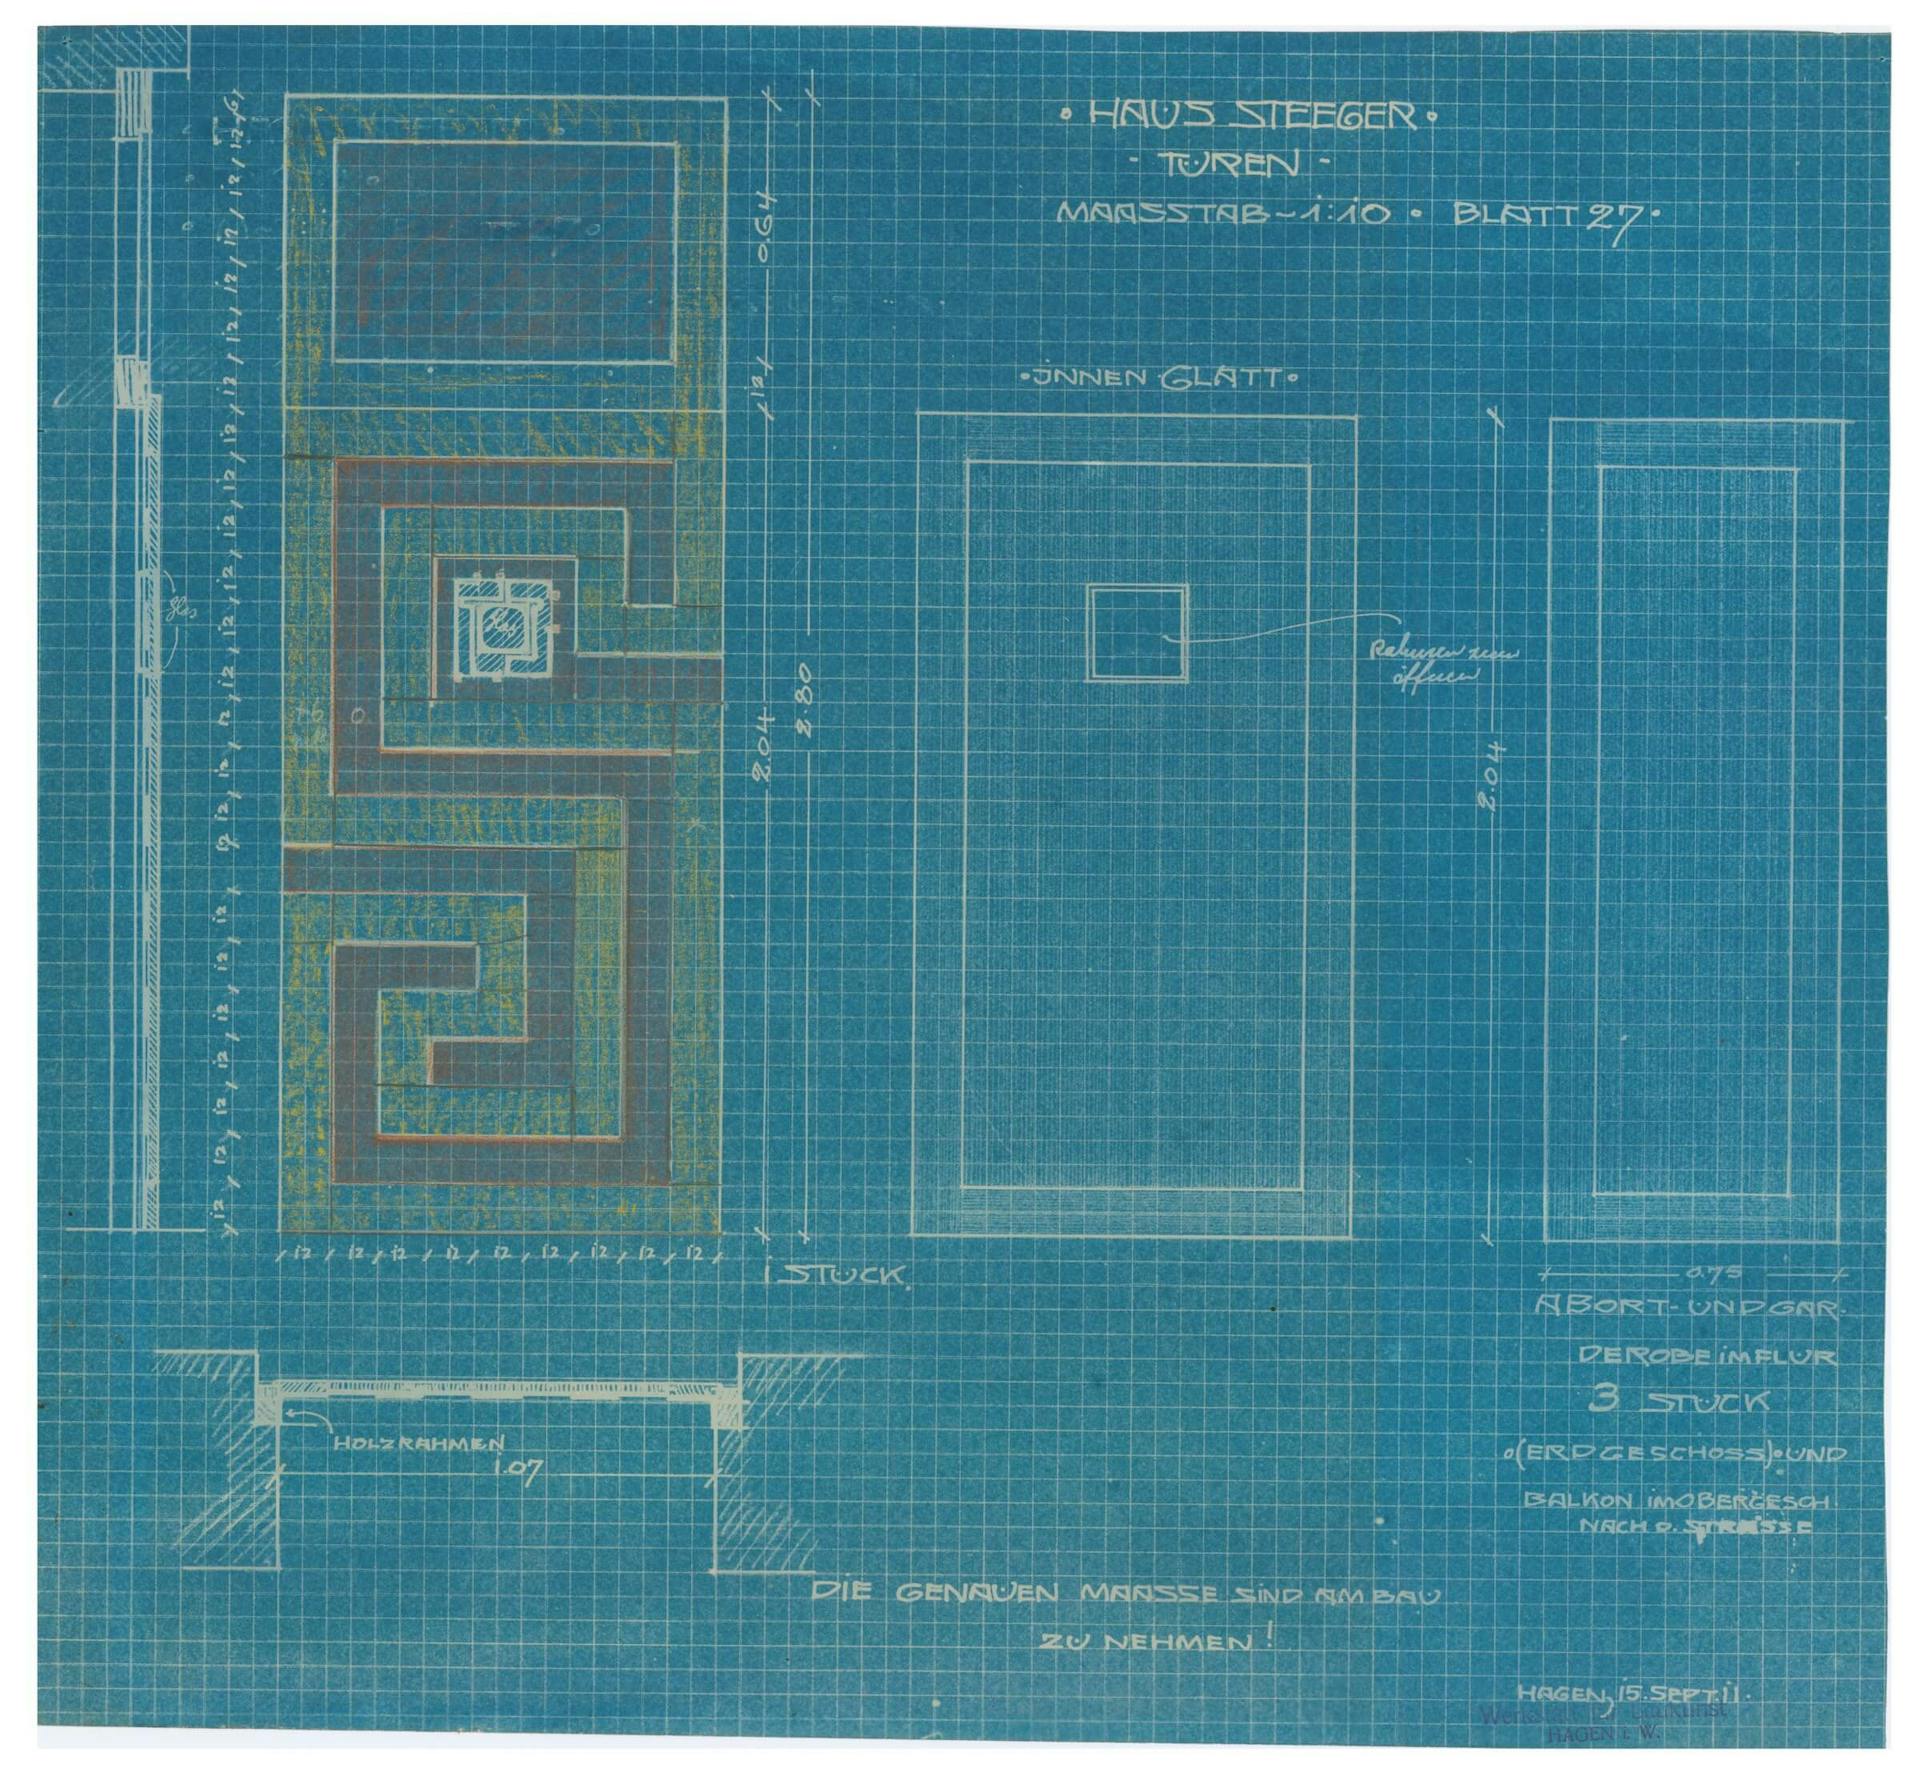 J.L.M. Lauweriks blueprint of the door design of residential building, M. Steeger, 1911-1912. Collection: Het Nieuwe Instituut, archive: J.L.M. Lauweriks, inventory number: LAUW15.50. 